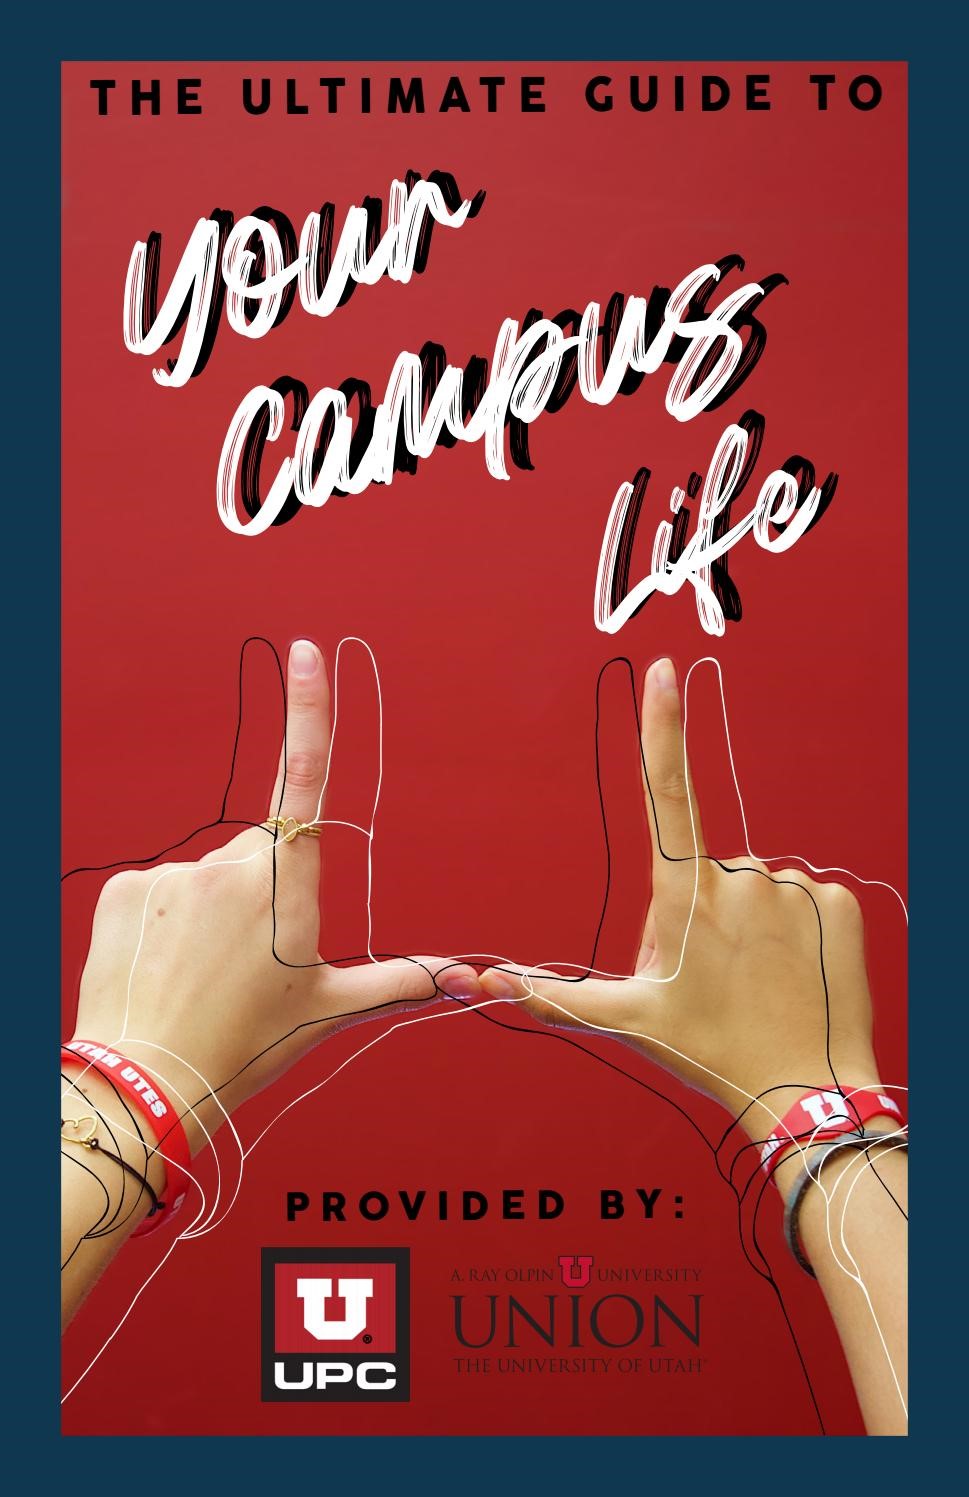 Your Campus Life Guidebook